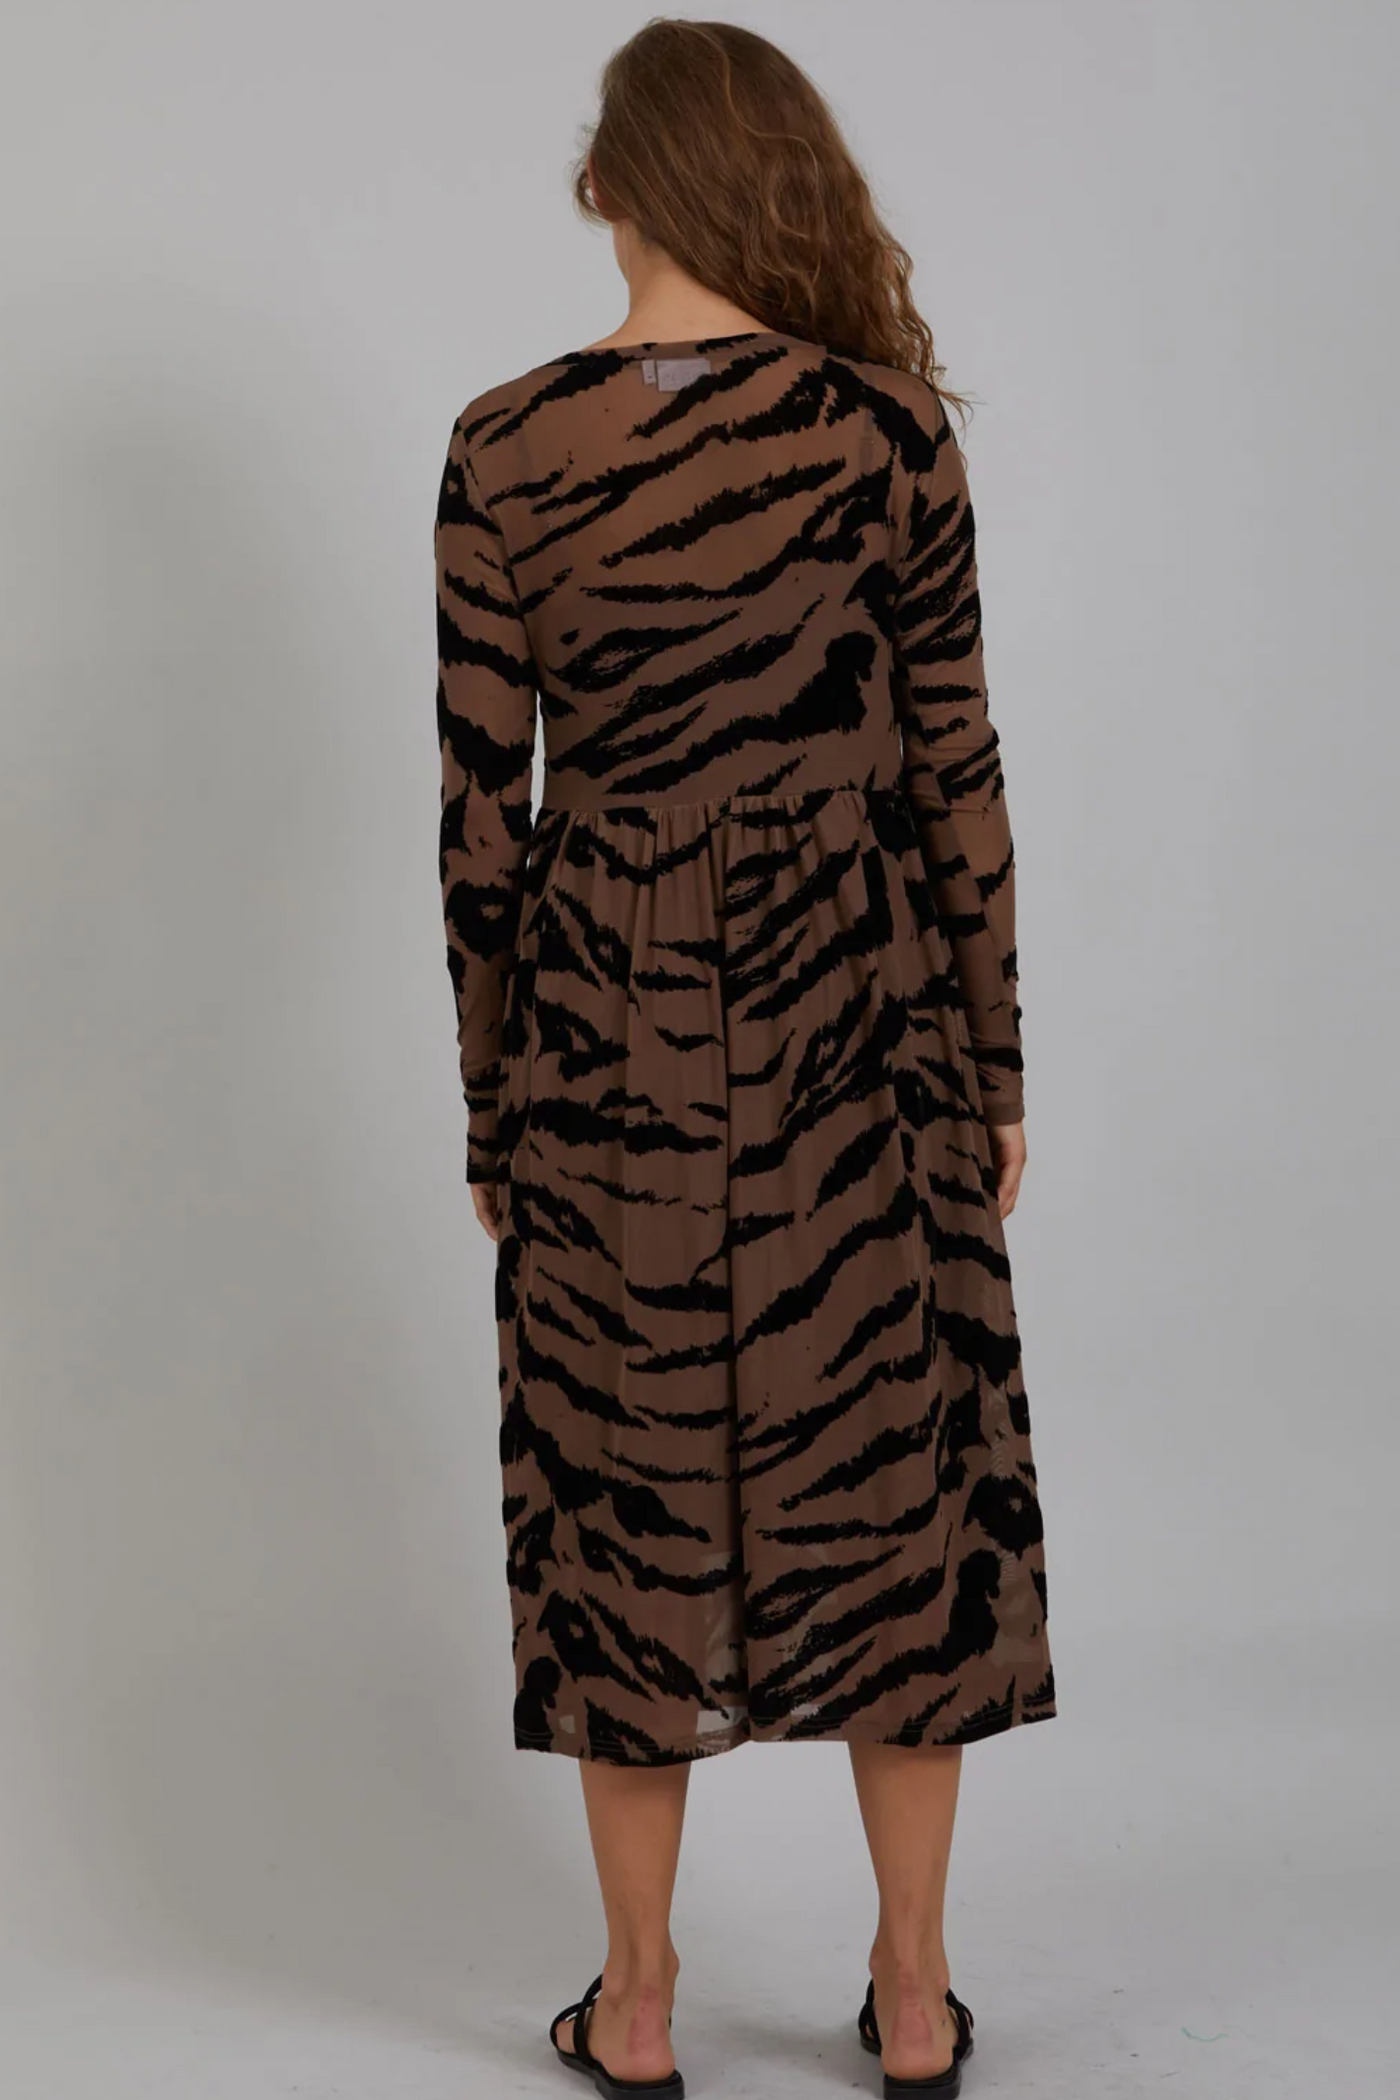 Coster Copenhagen Brown Zebra Print Mesh Dress | Jezabel Boutique